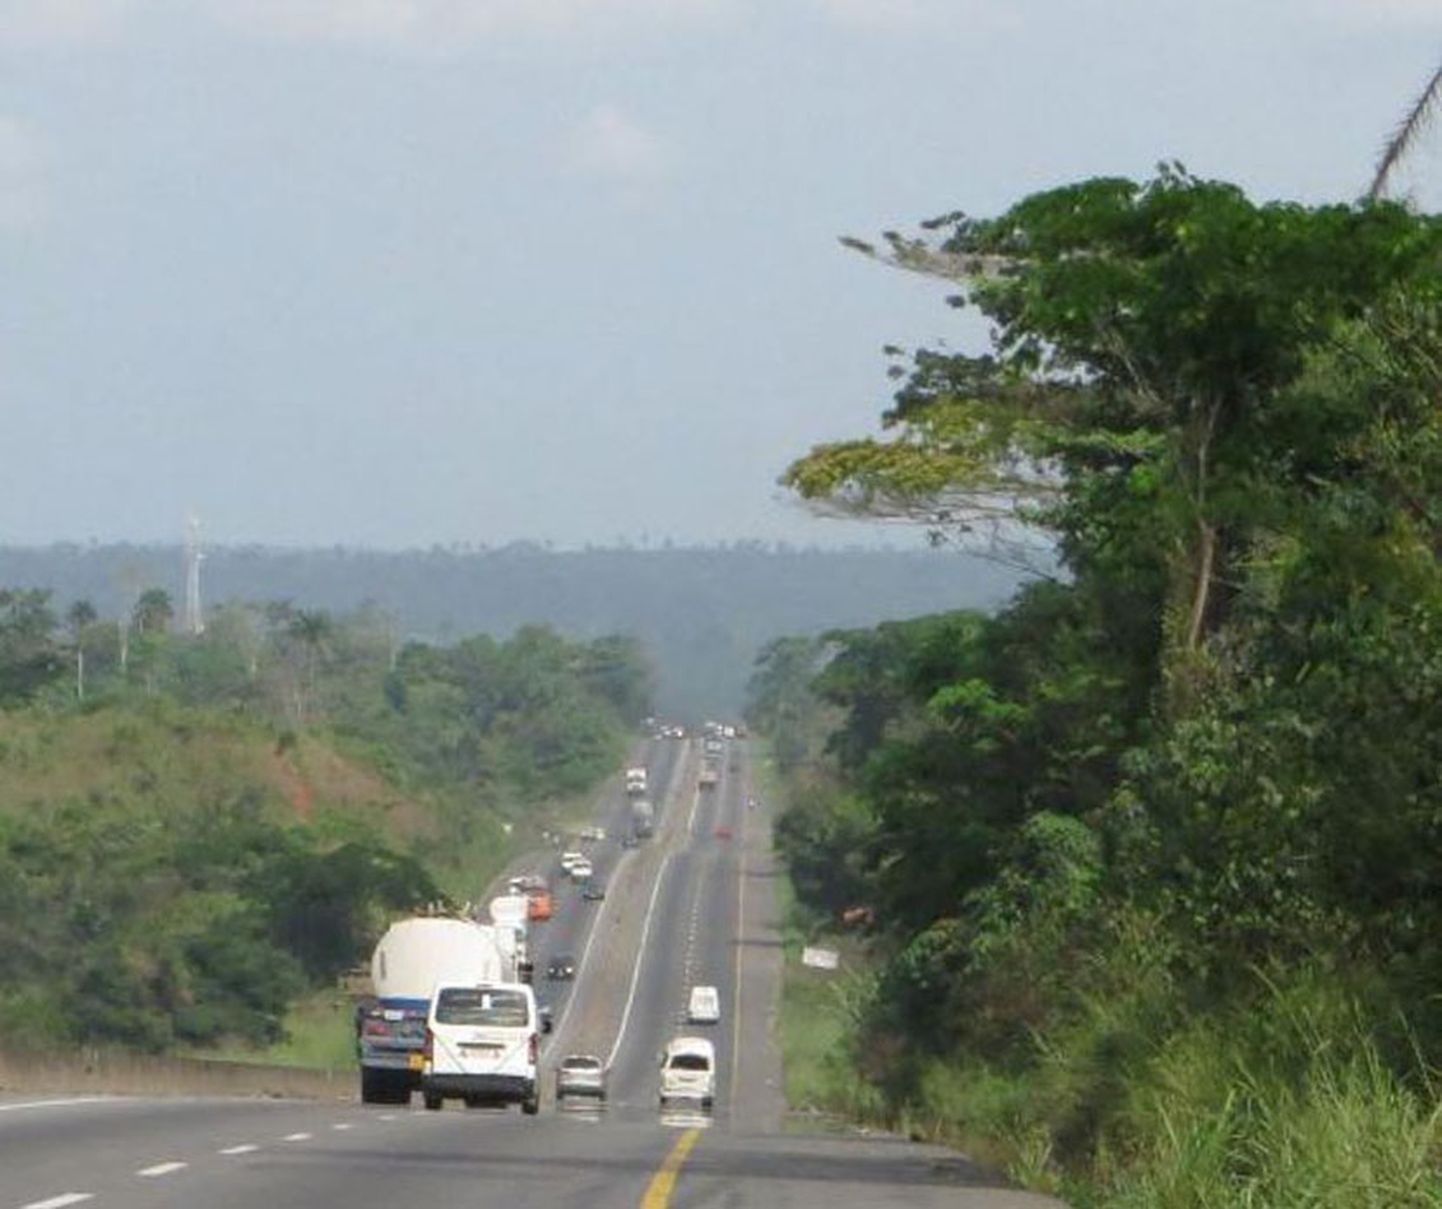 Lagos-Ibadani maantee.